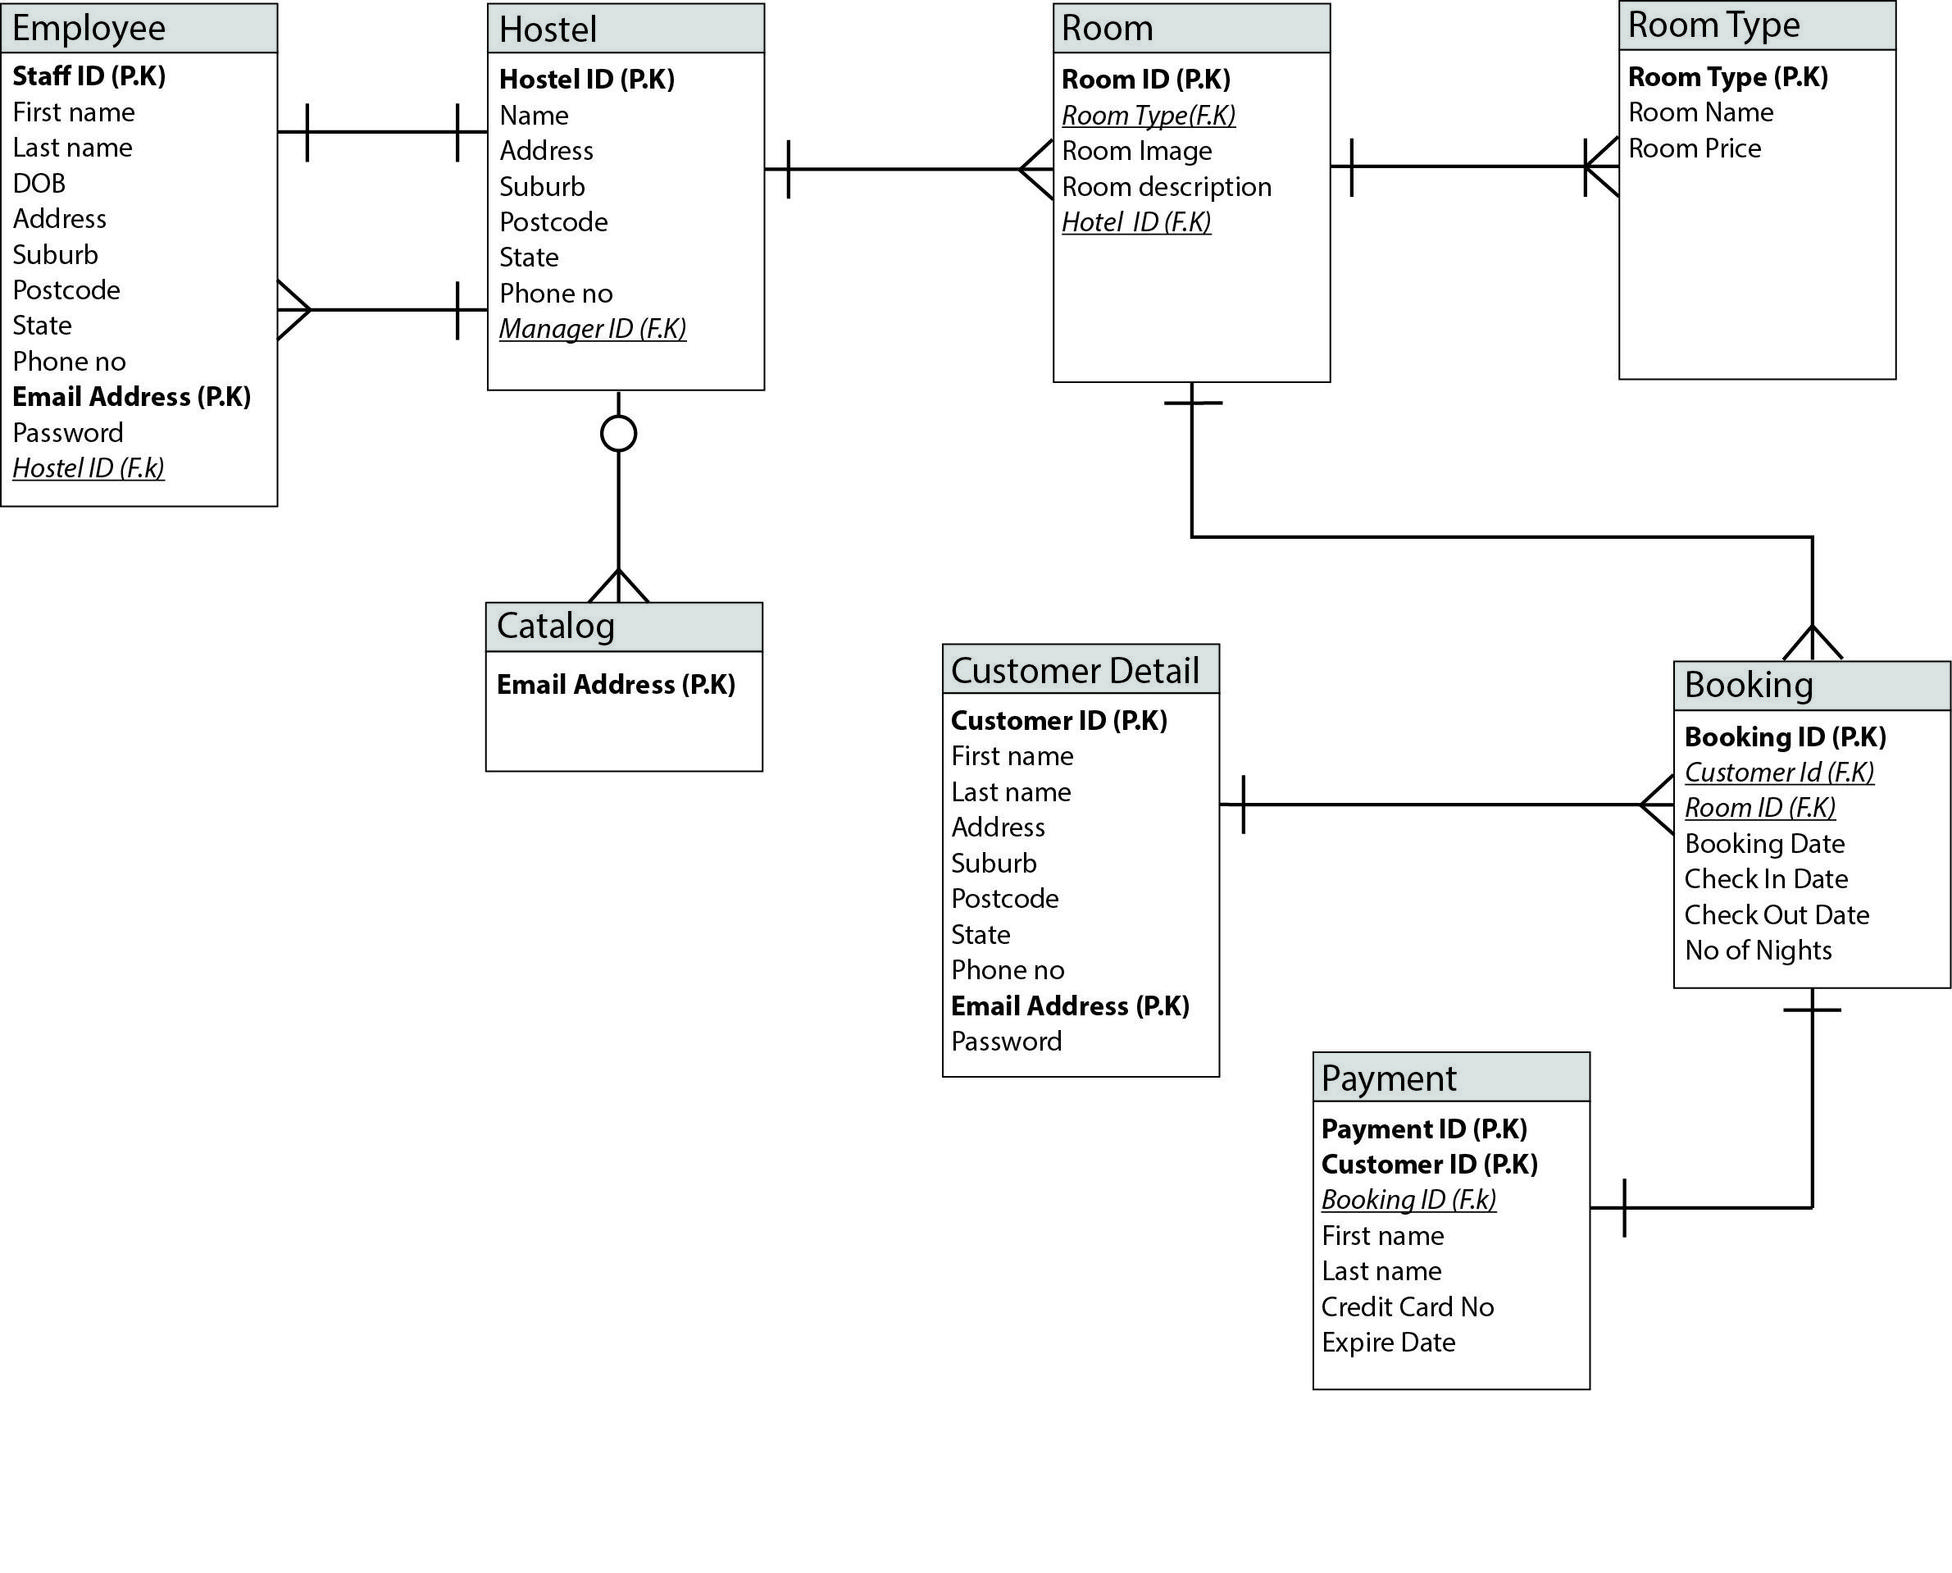 Hostel Management System Data Flow Diagram